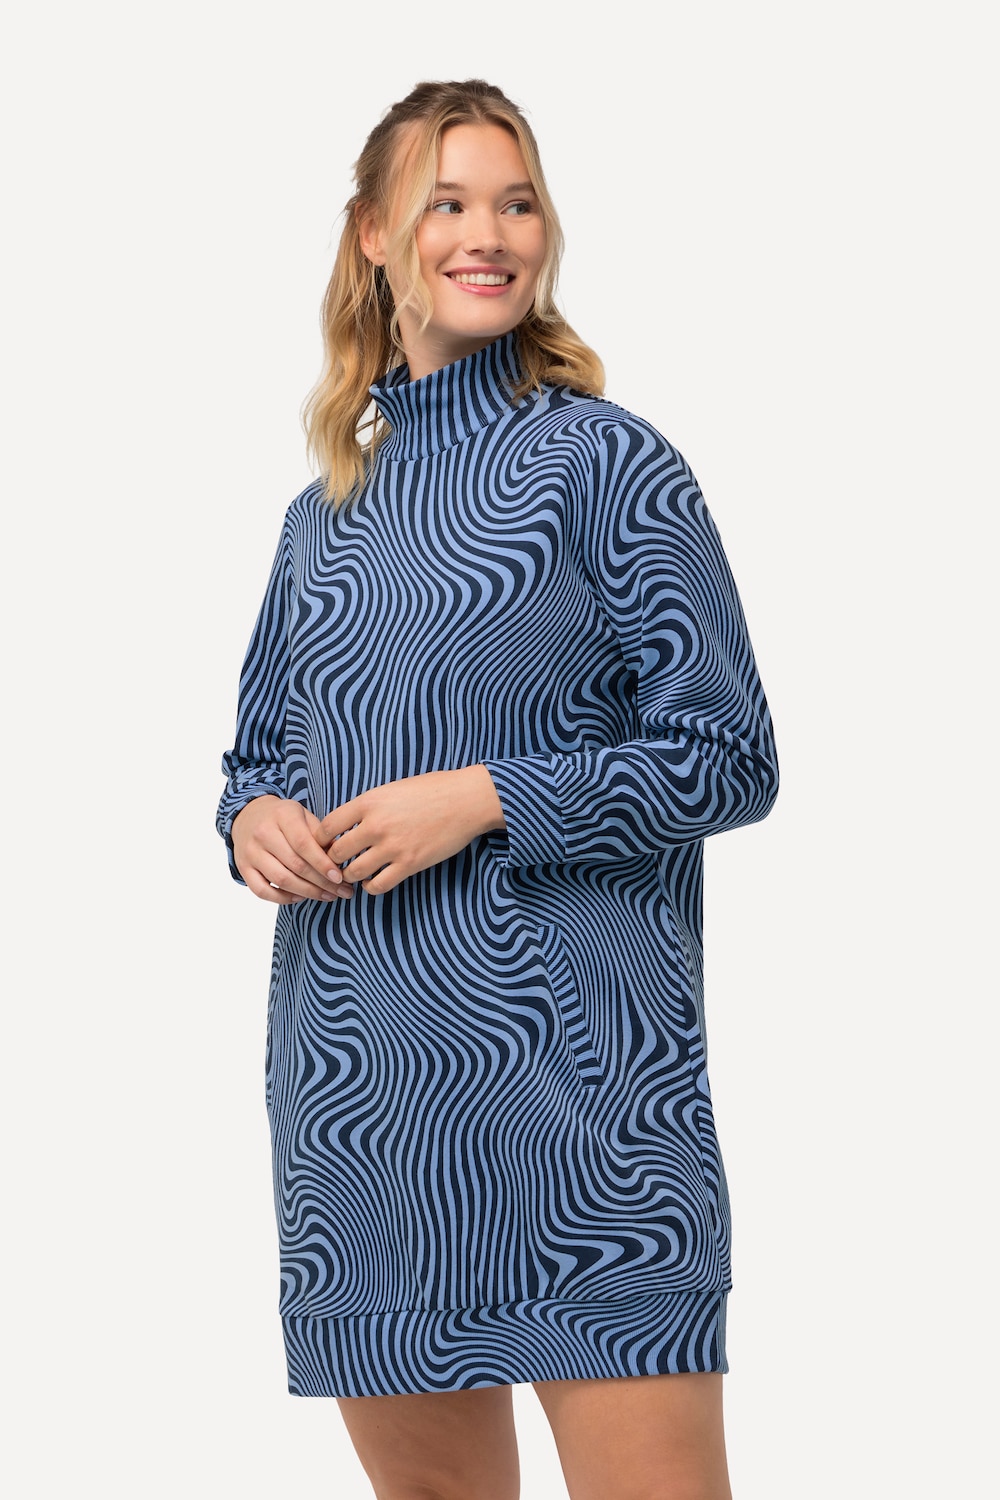 Grote Maten Loungewear jurk, Dames, blauw, Maat: 42/44, Katoen/Polyester, Ulla Popken